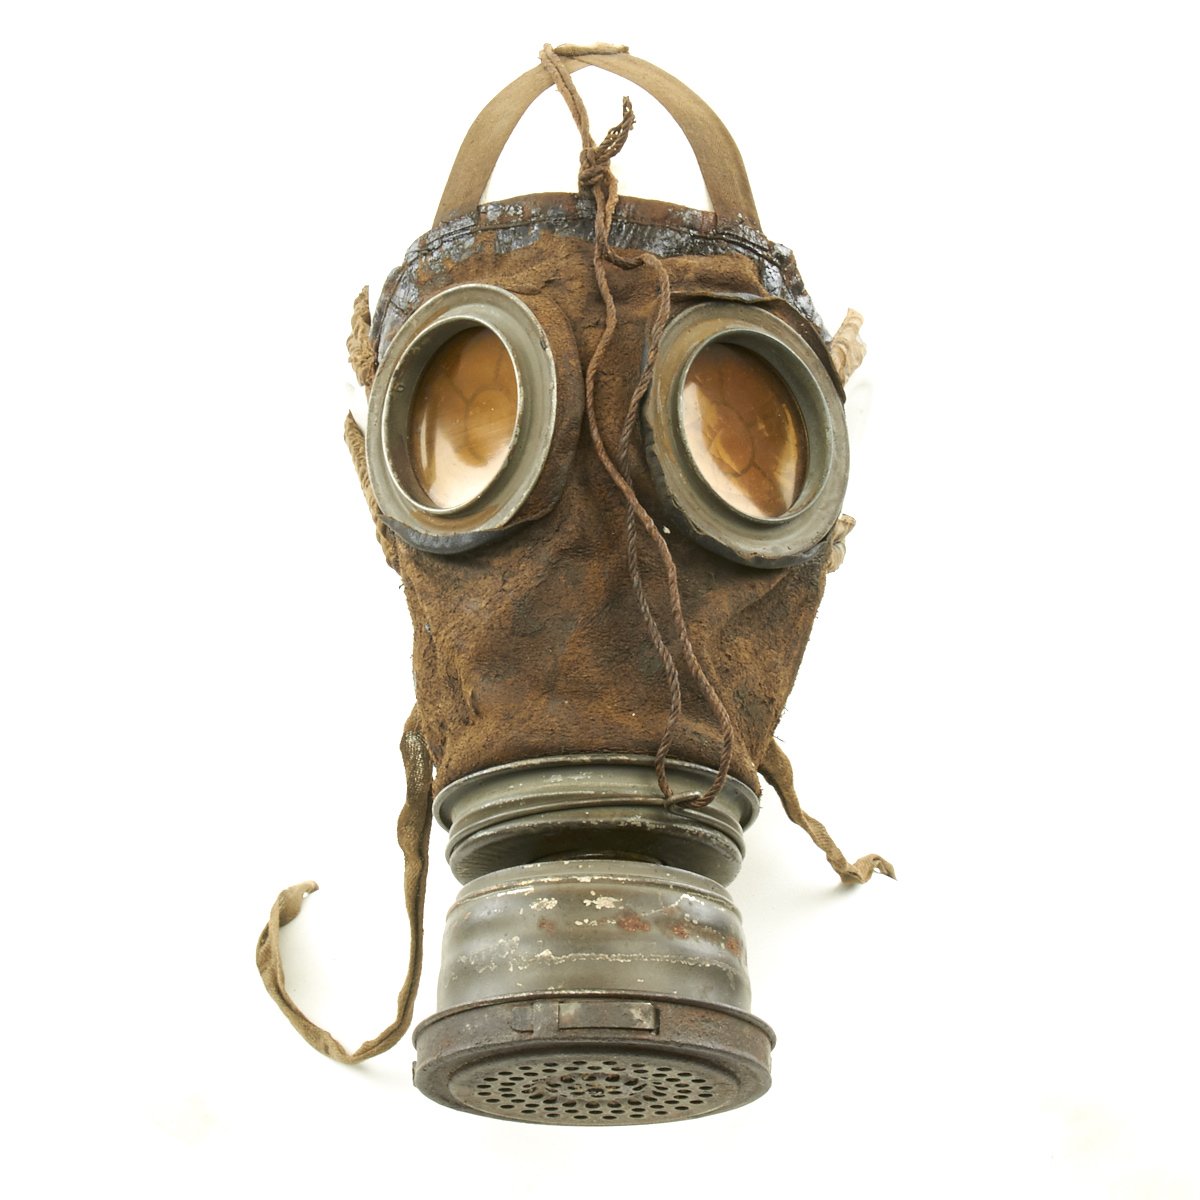 german gas mask wwi